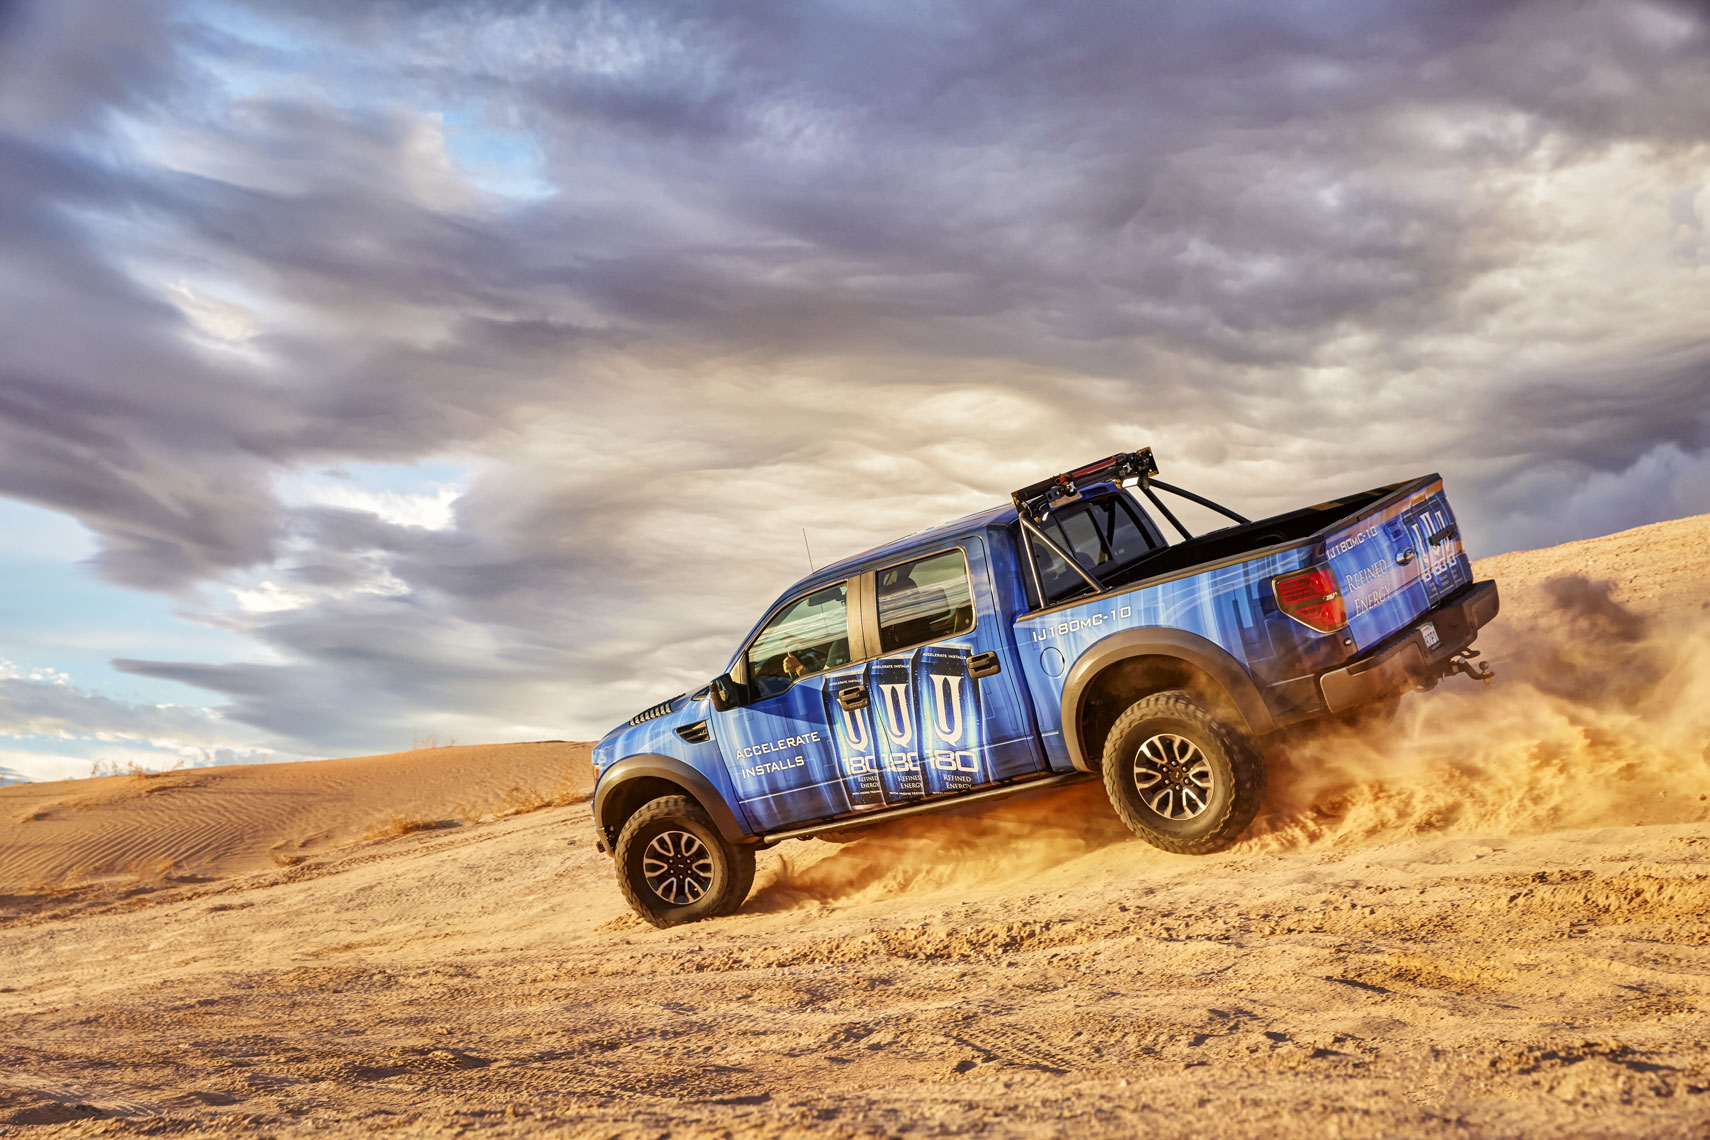 Truck/sand dunes/3M auto wraps/Vegas/location photography